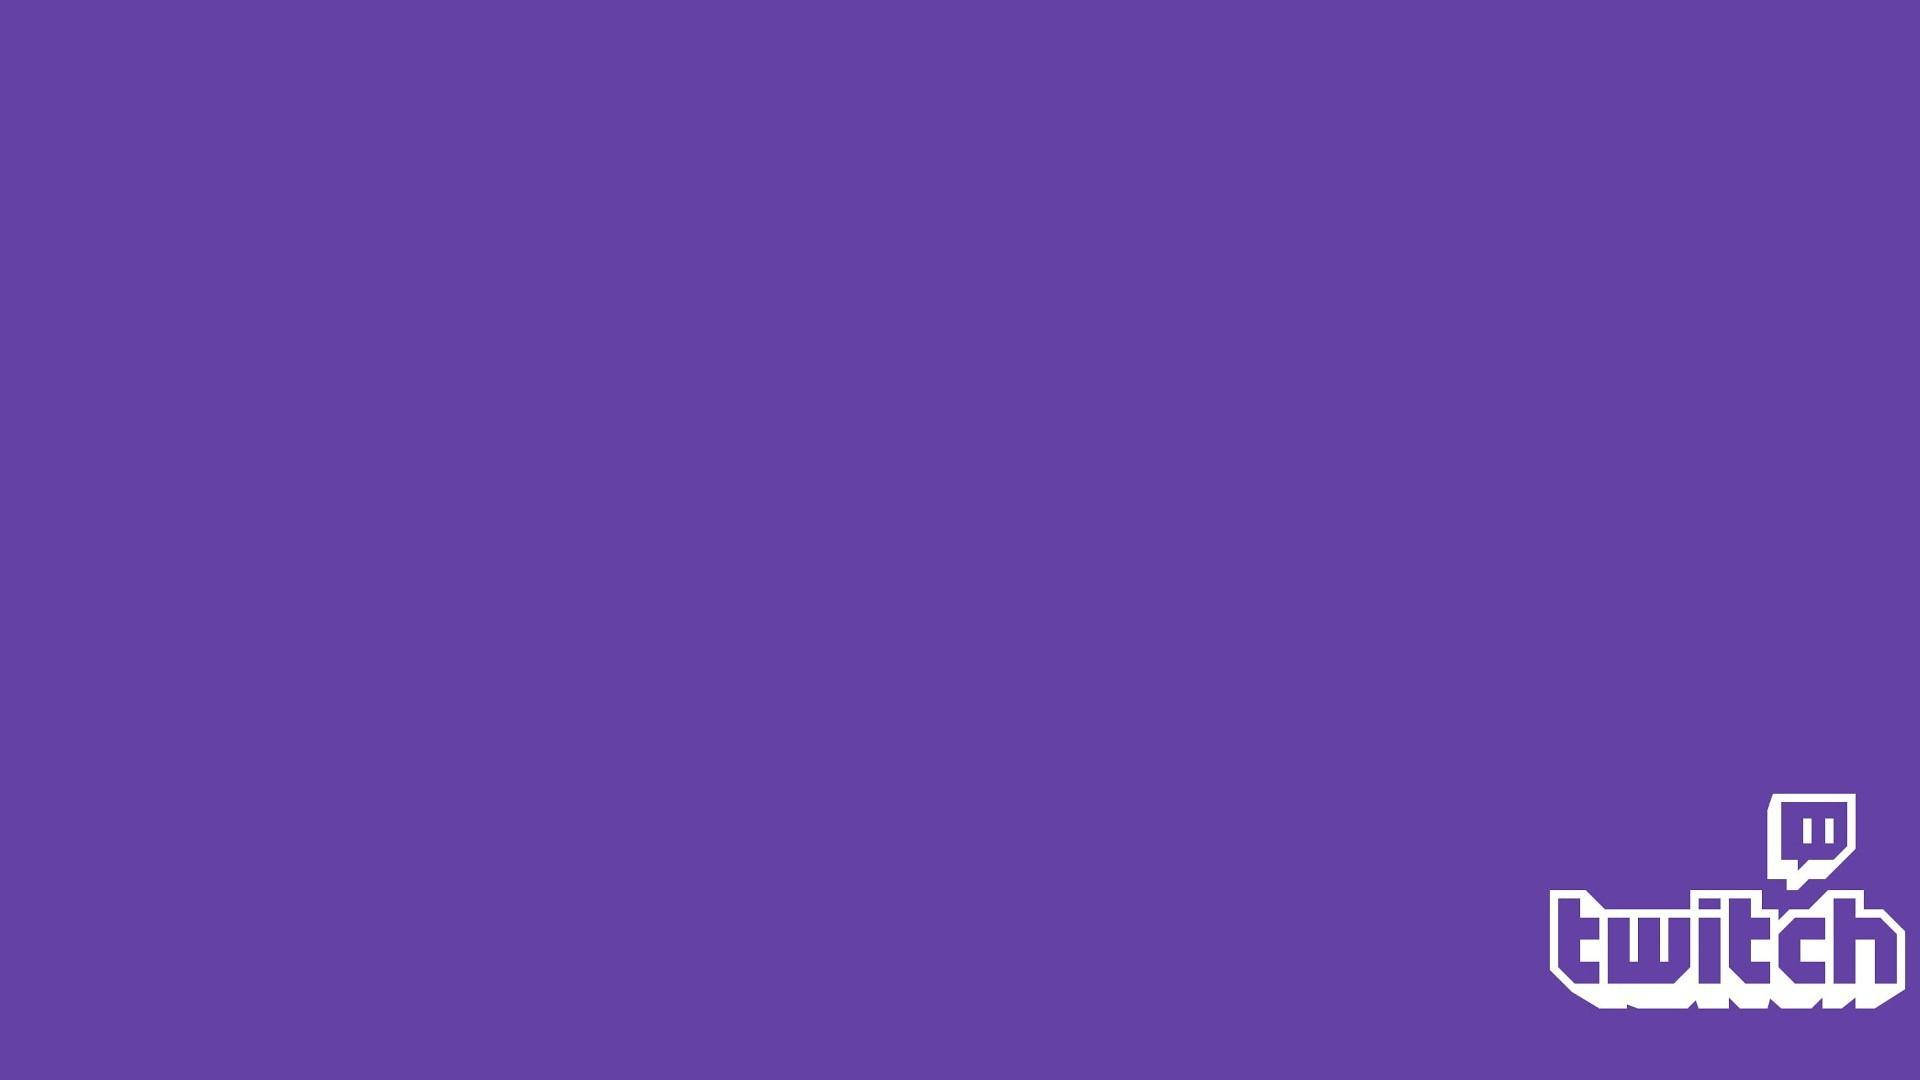 Twitch Minimalism Purple Art Background